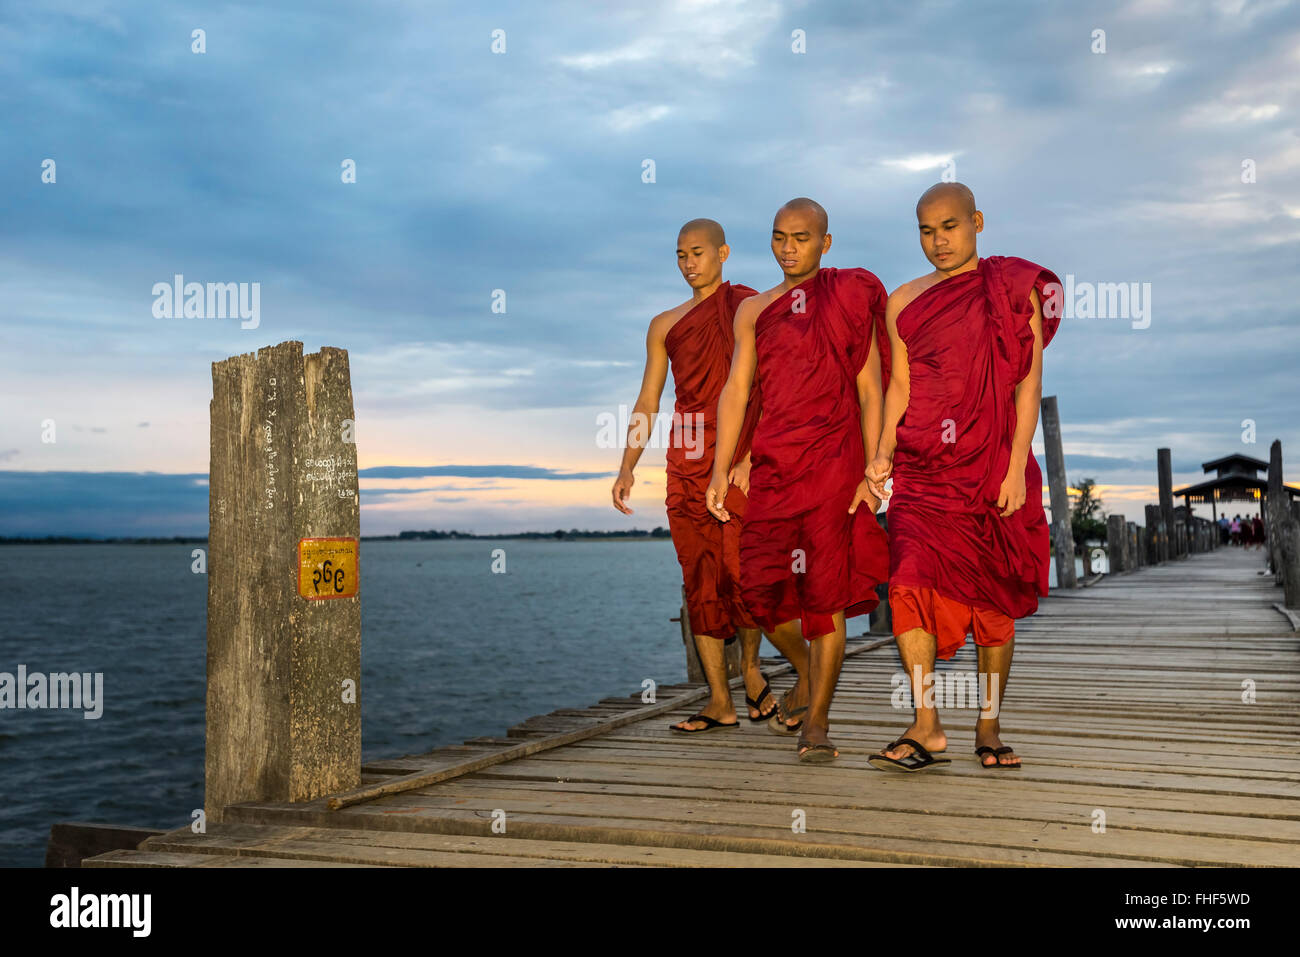 Monks on teakwood bridge, U Bein Bridge, Thaungthaman Lake, evening mood, Amarapura, Mandalay Division, Myanmar, Burma Stock Photo